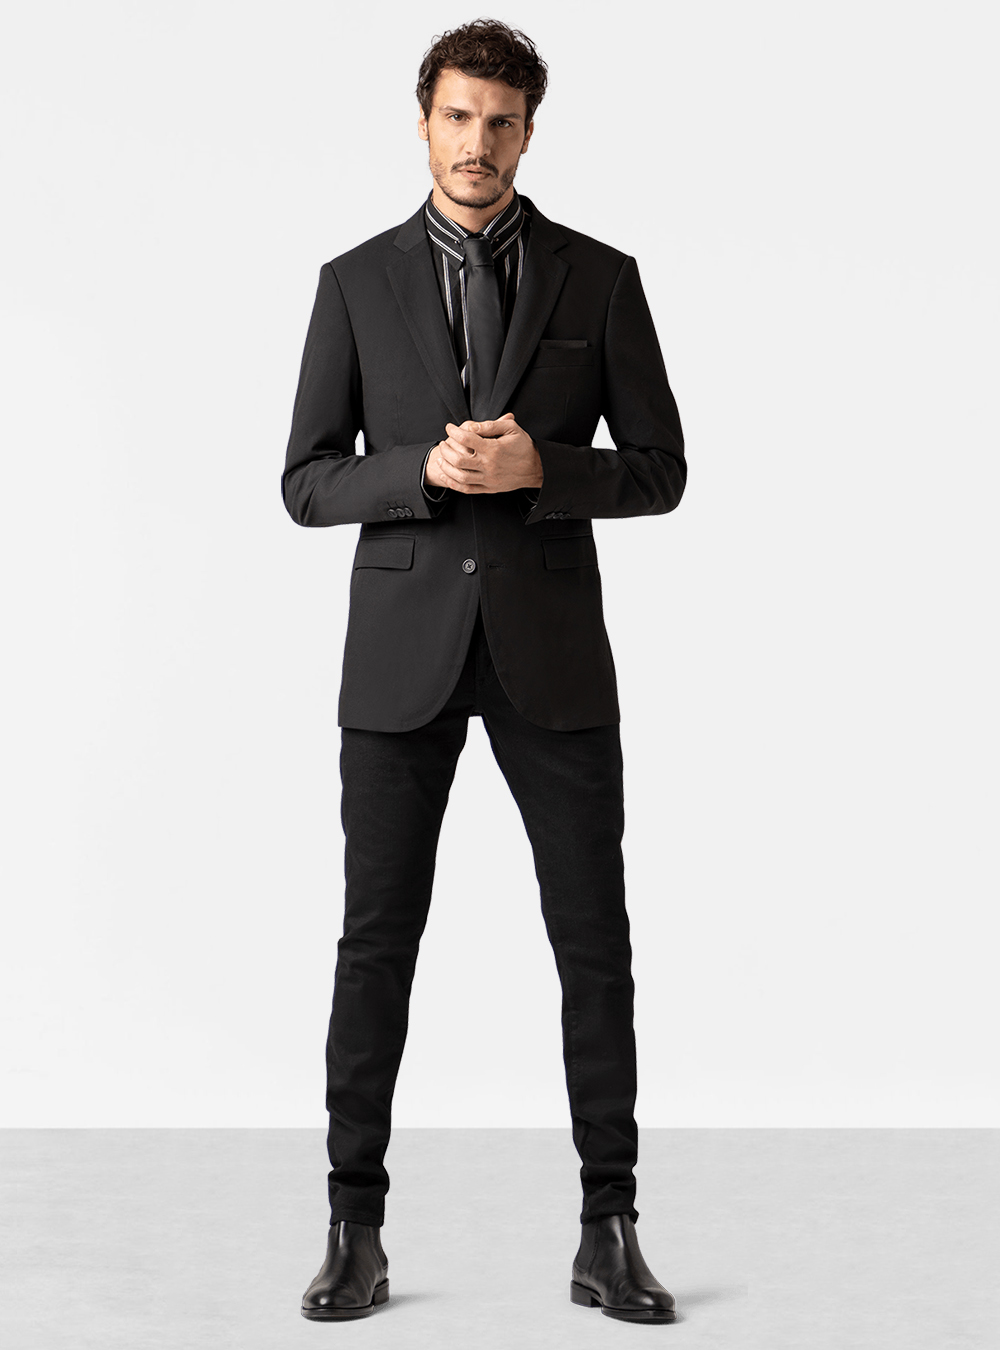 Black suit jacket, black and white dress shirt, black jeans, black tie and black Chelsea boots